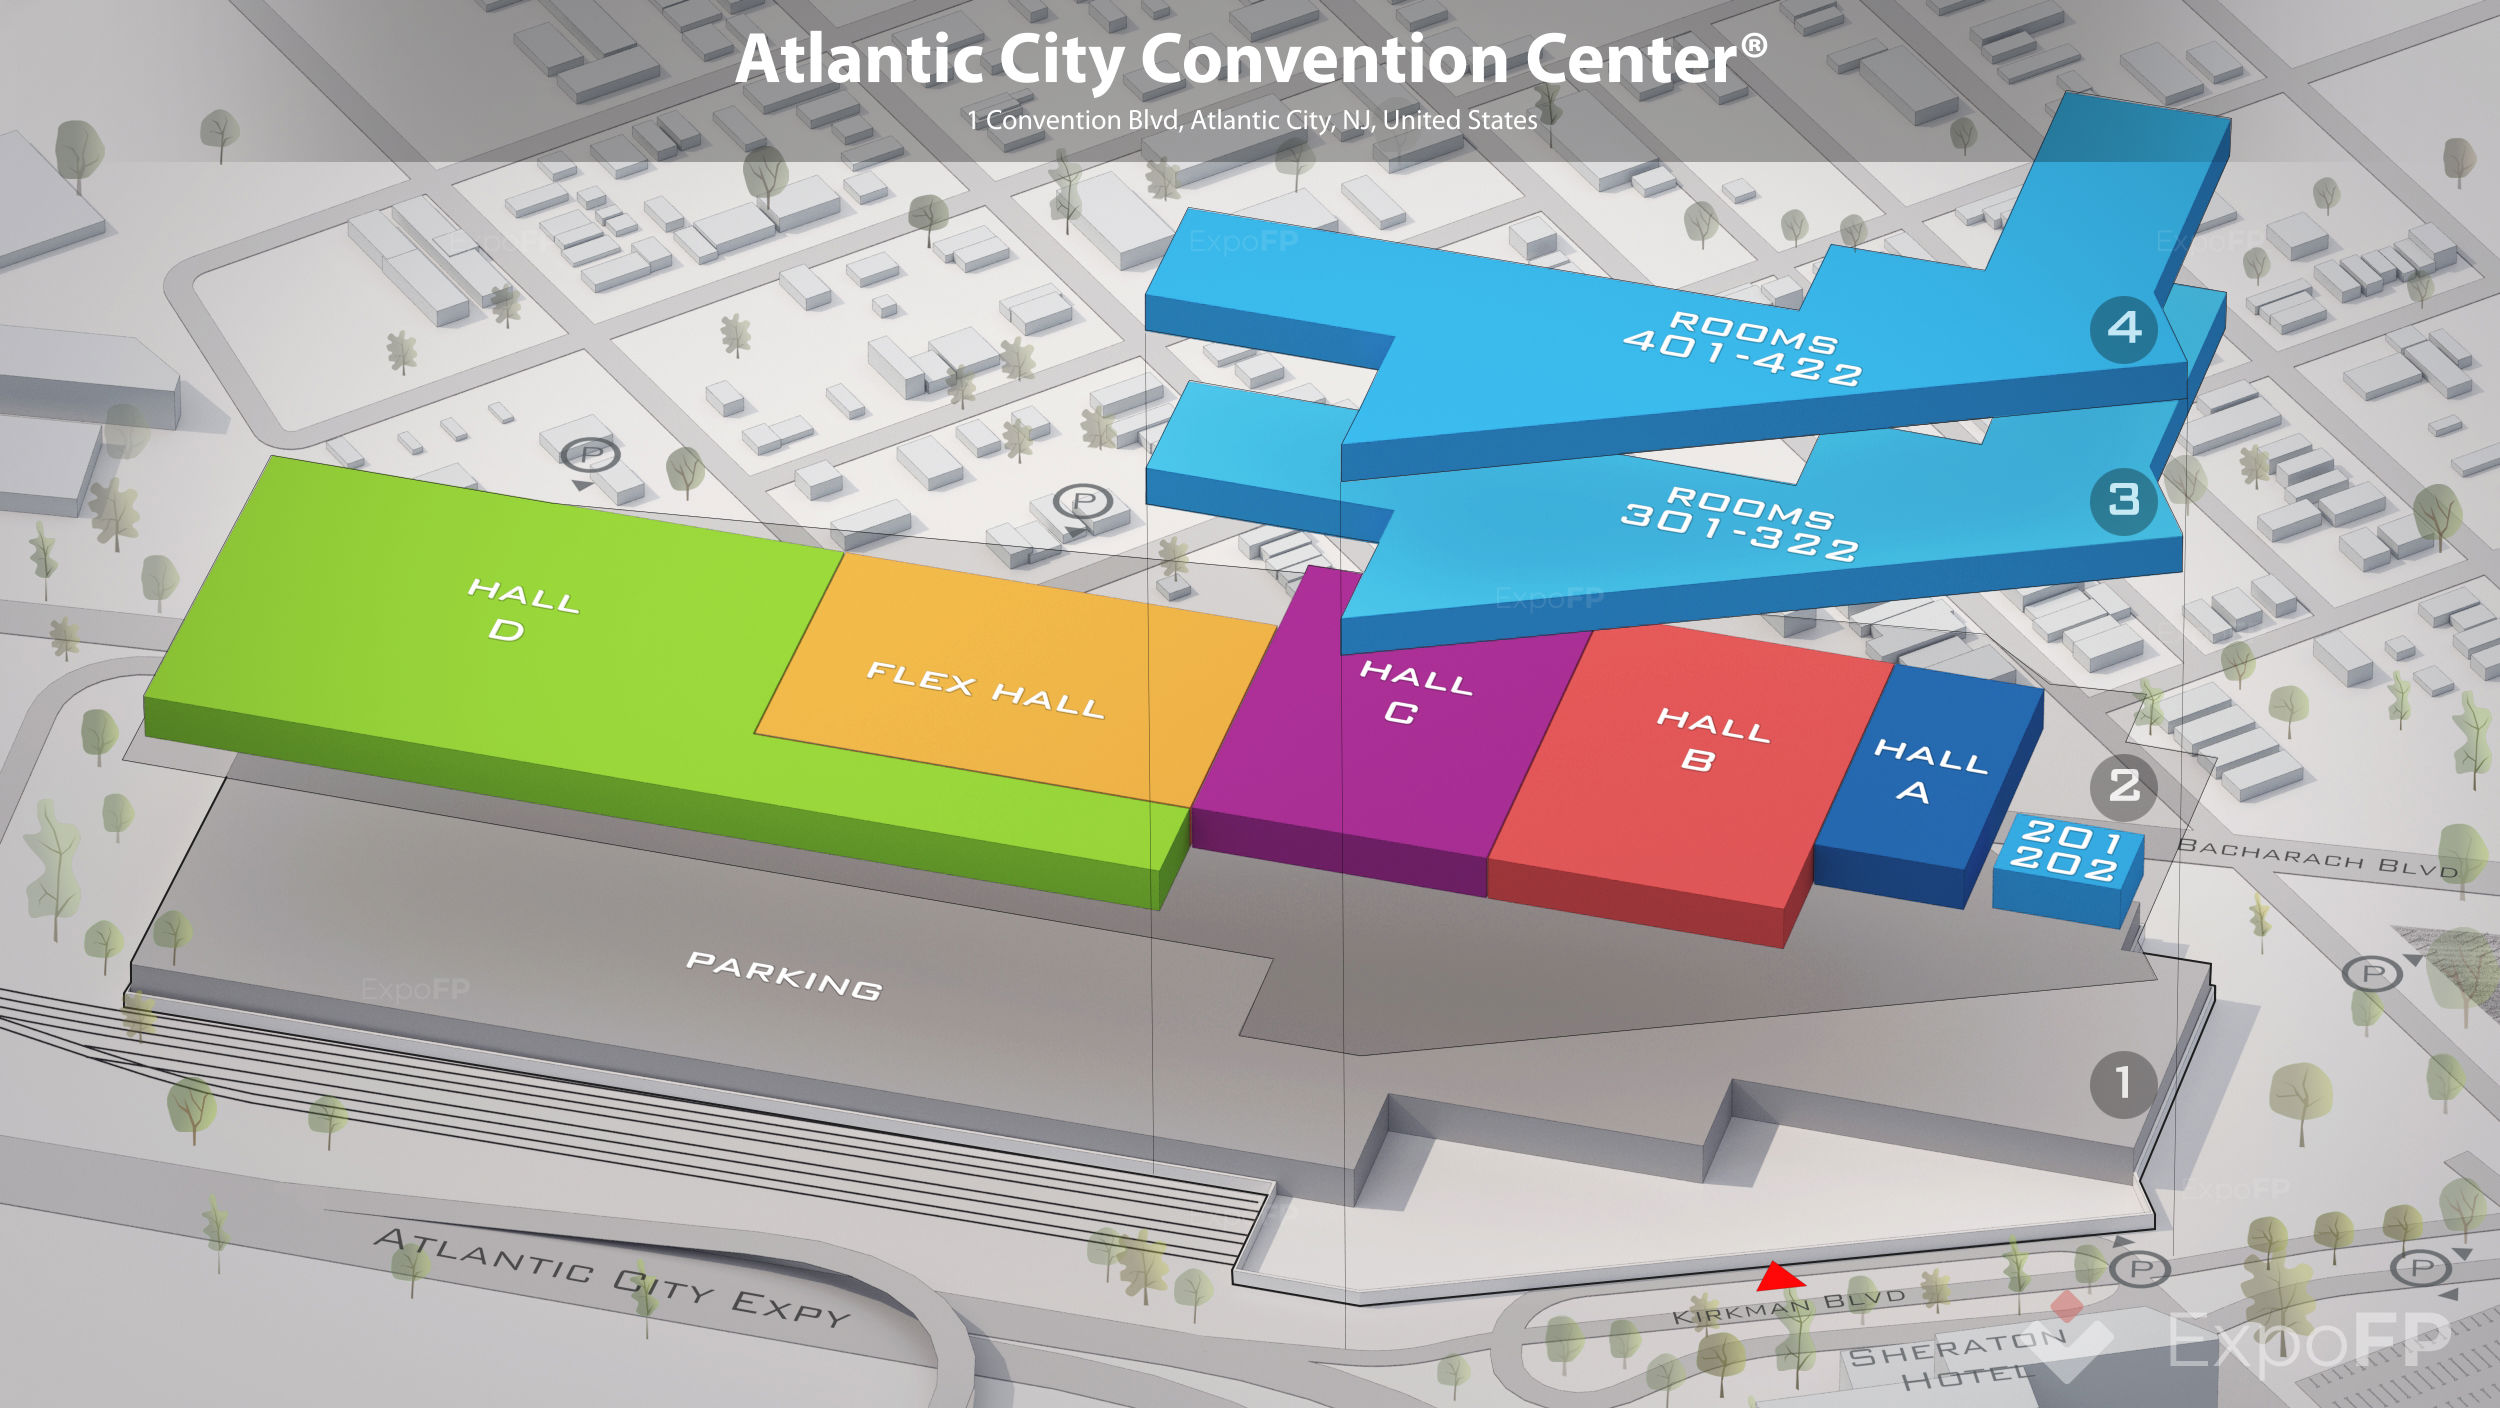 Atlantic City Convention Center floor plan